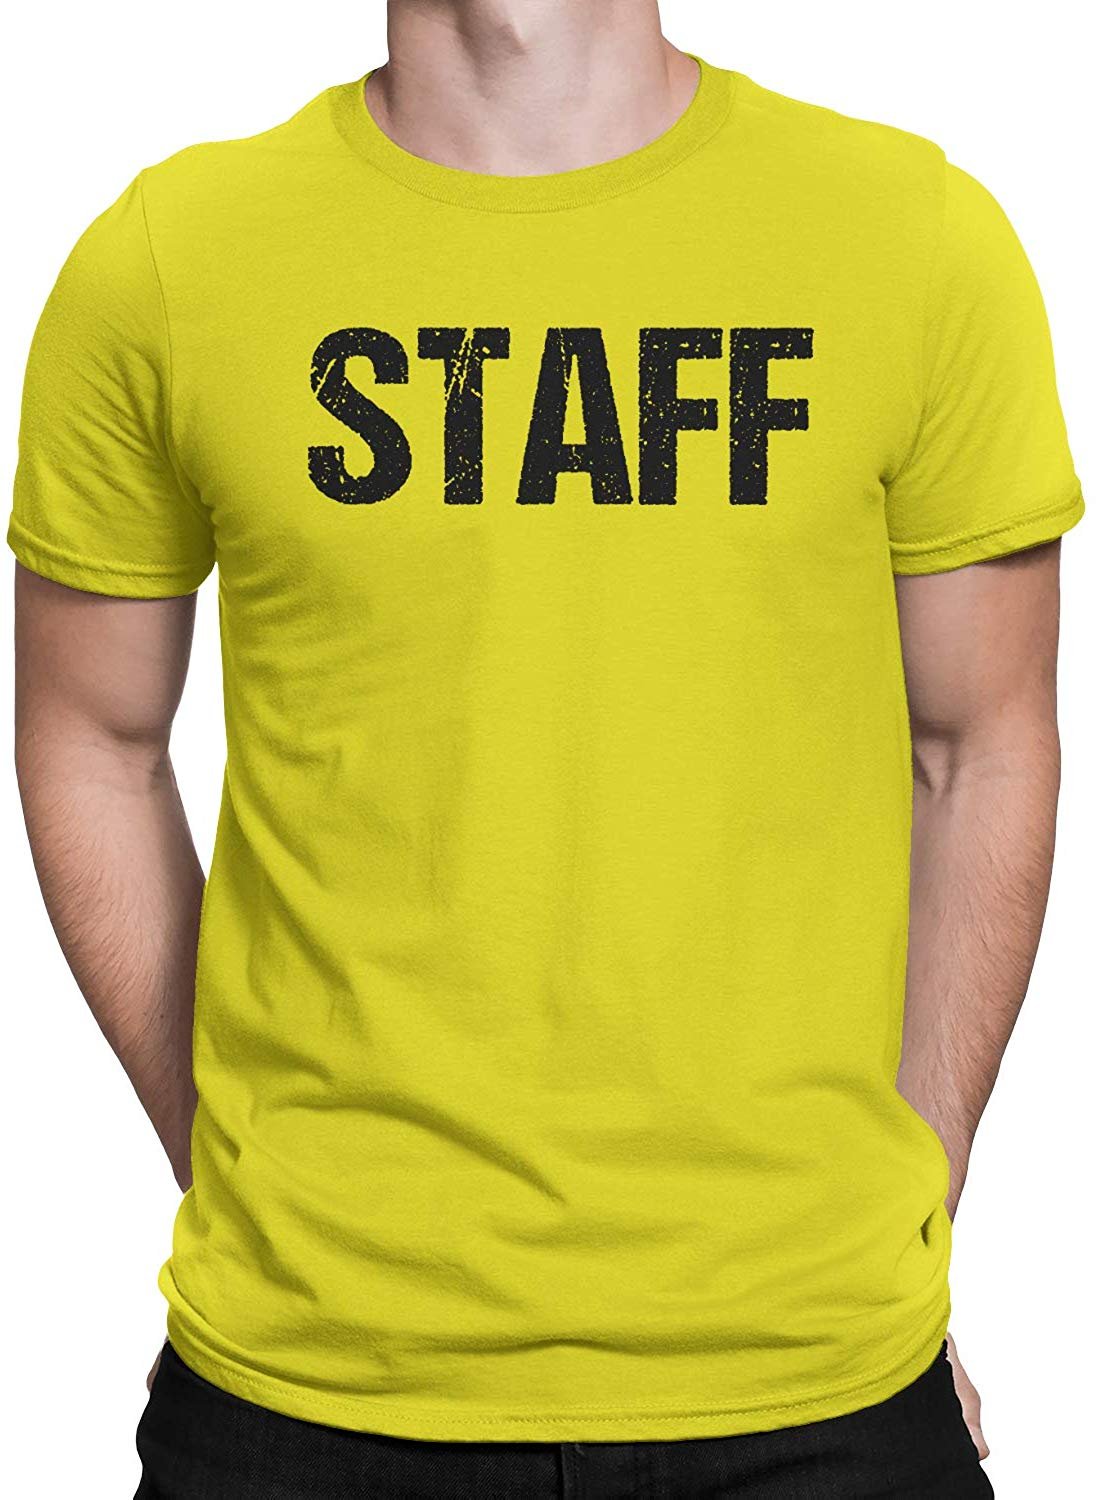 Staff Men's Short Sleeve T-Shirt (Distressed Design, Bright Yellow)